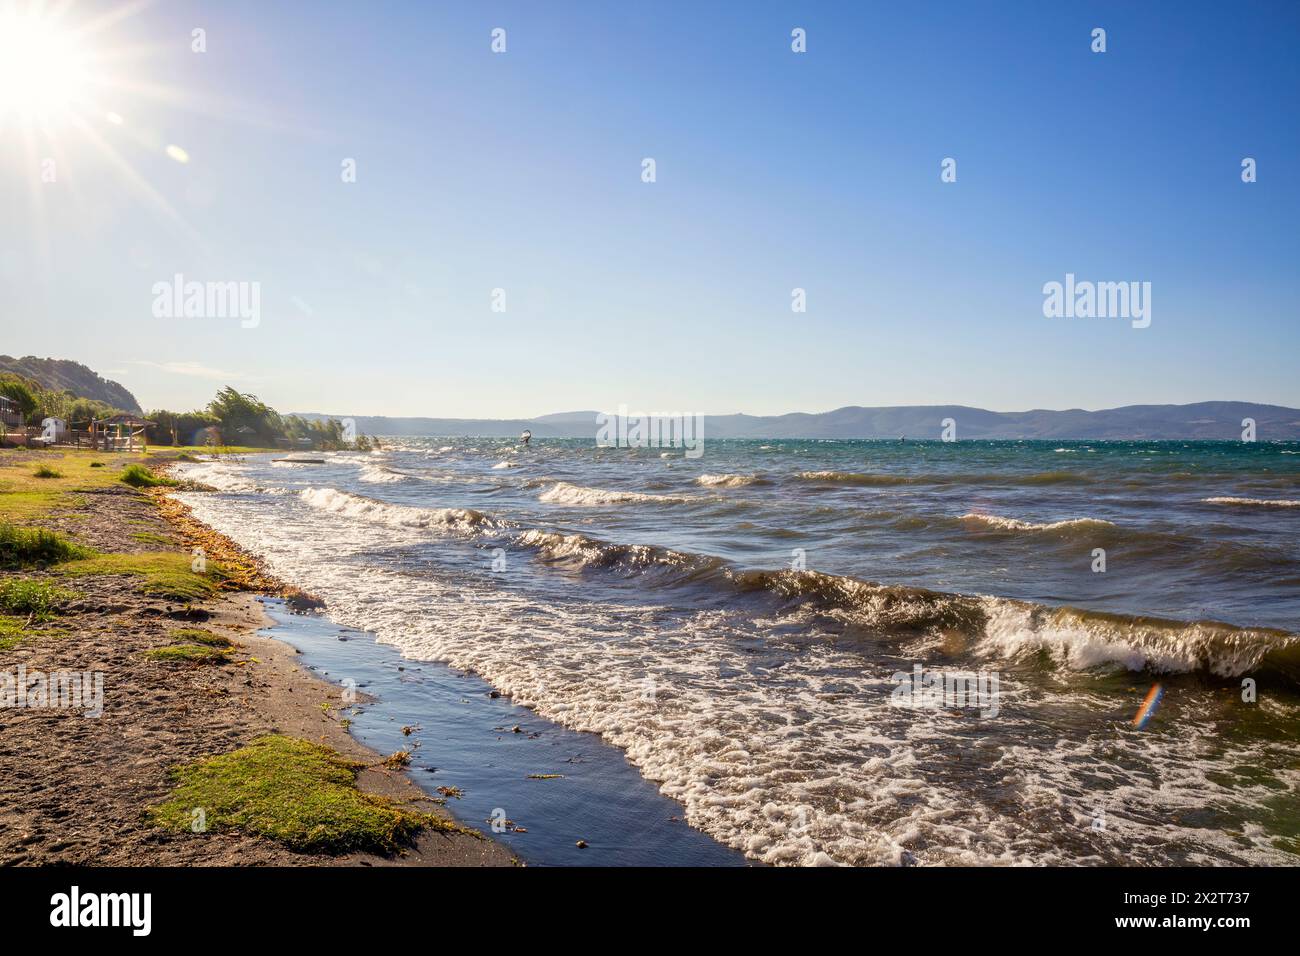 Italie, Latium, Anguillara Sabazia, soleil brille sur les rives du lac Bracciano Banque D'Images